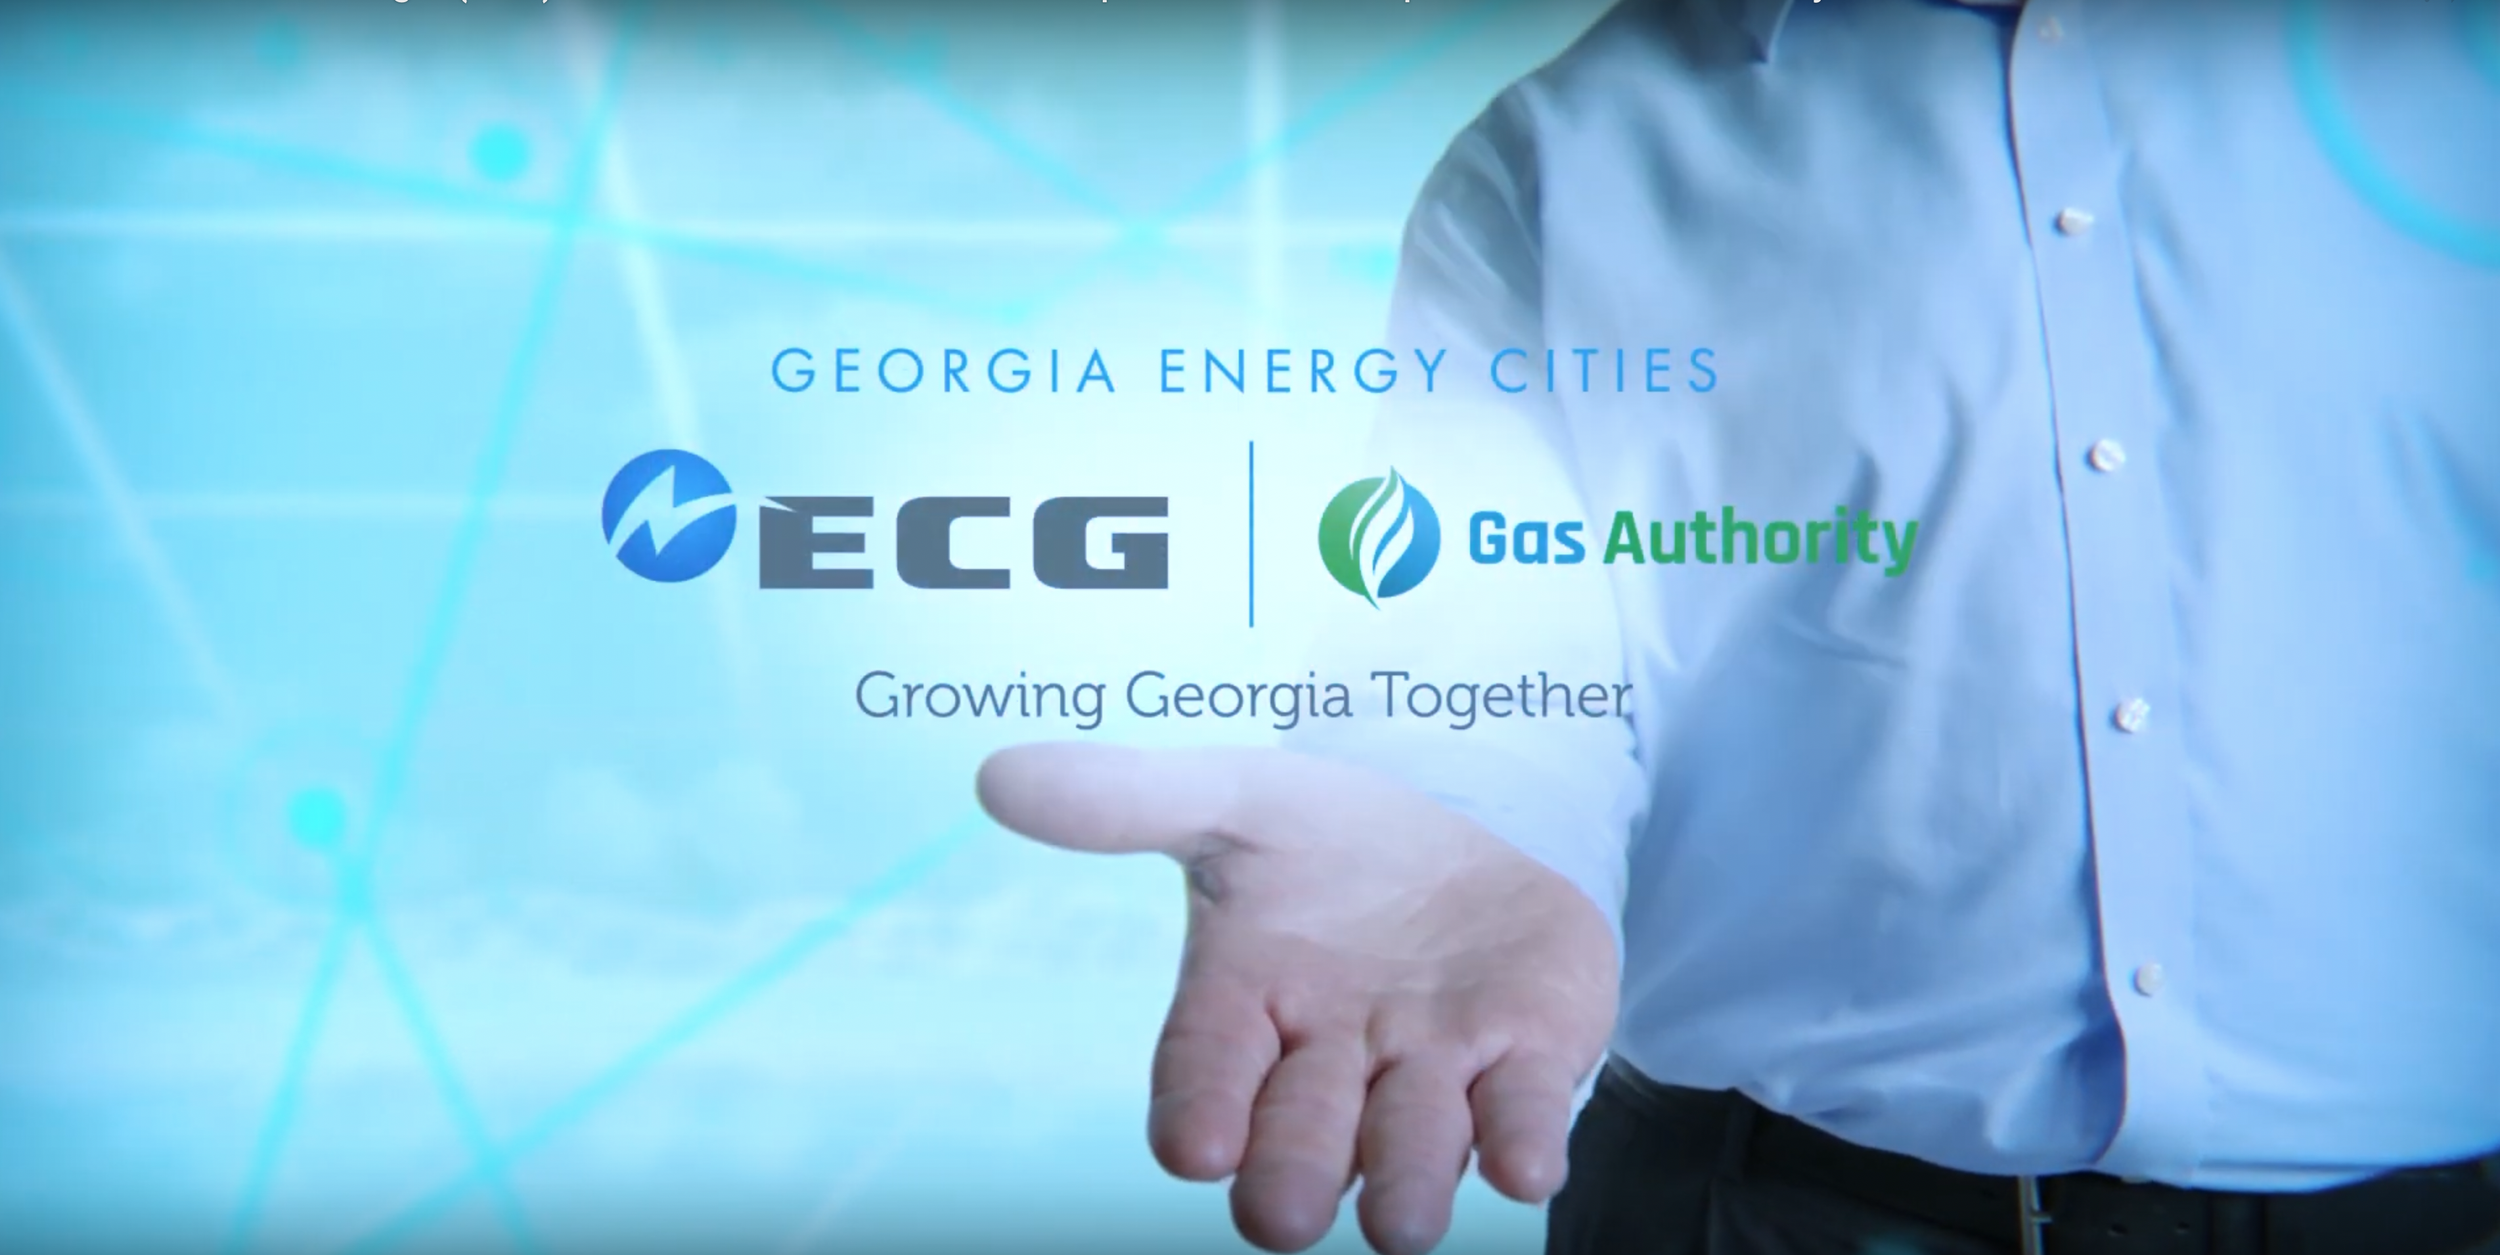 Electric Cities of Georgia's New Partnership